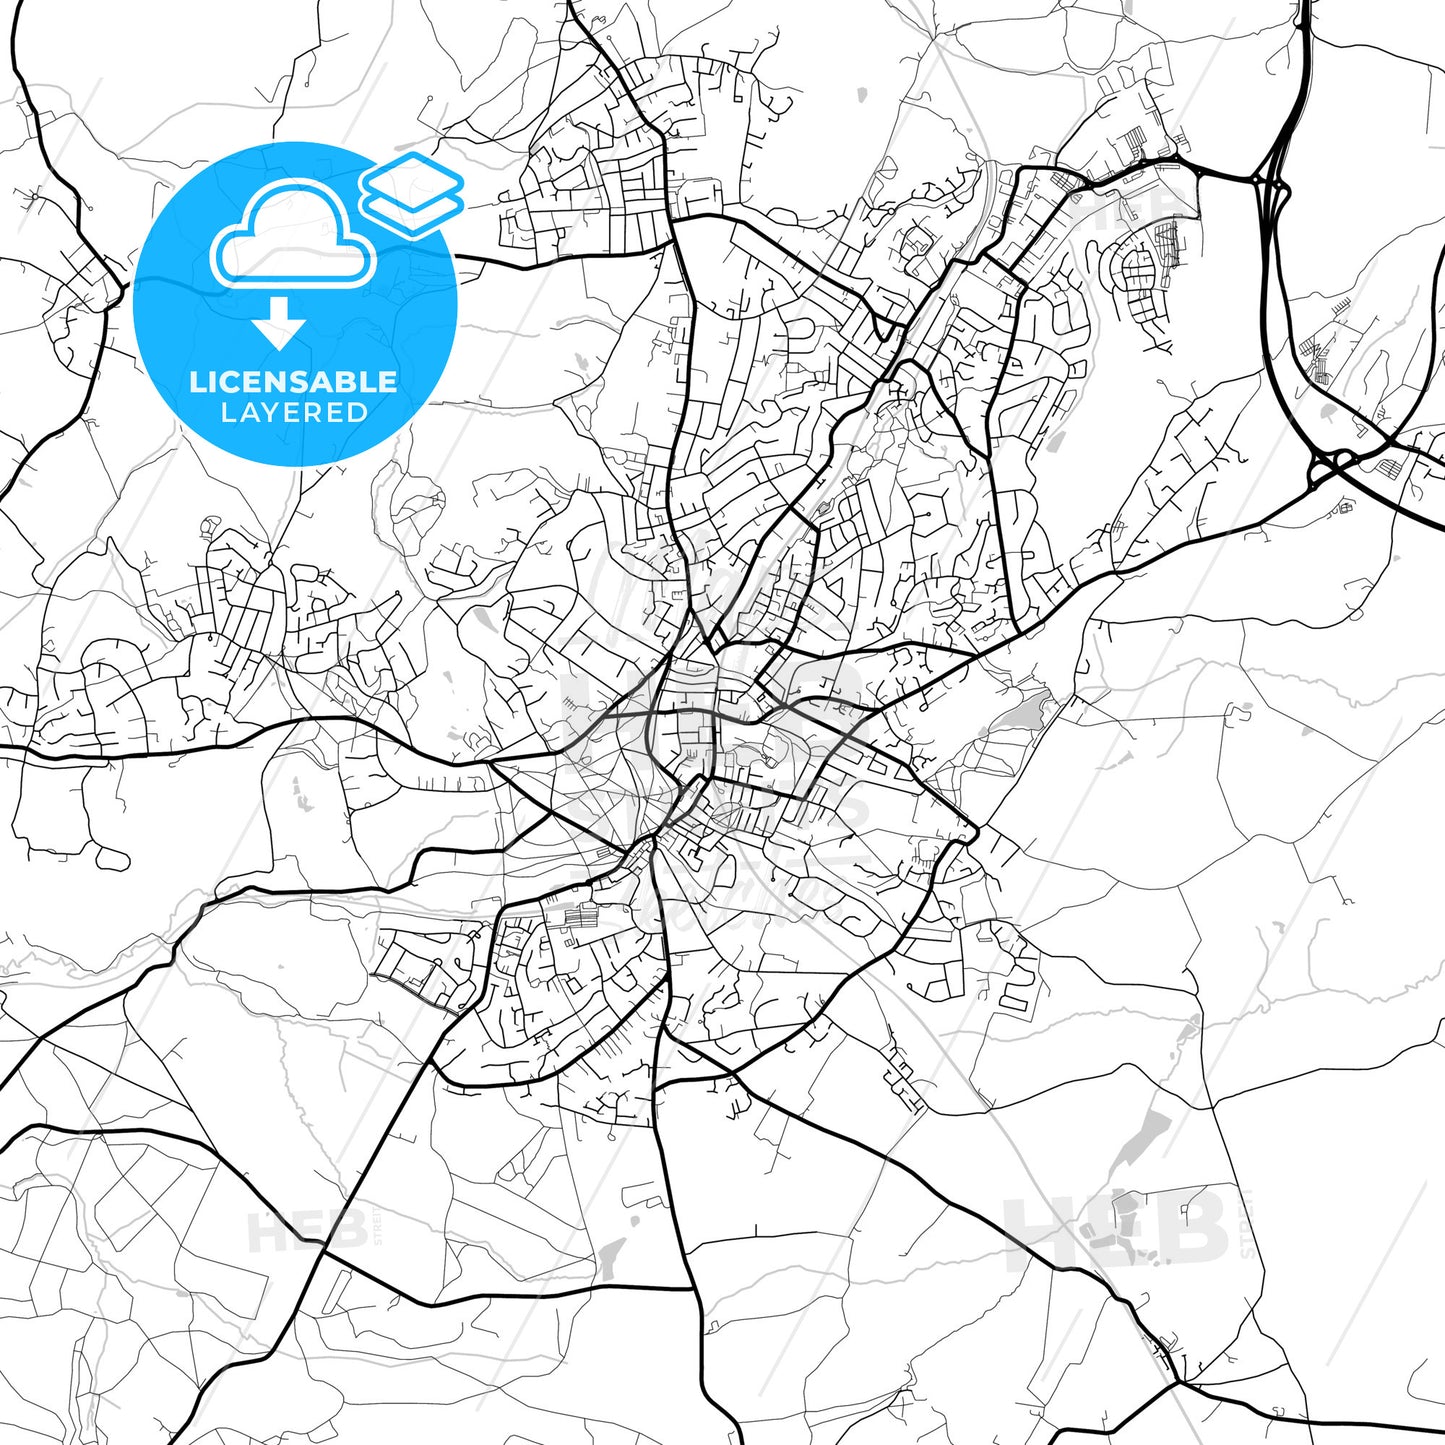 Layered PDF map of Royal Tunbridge Wells, South East England, England